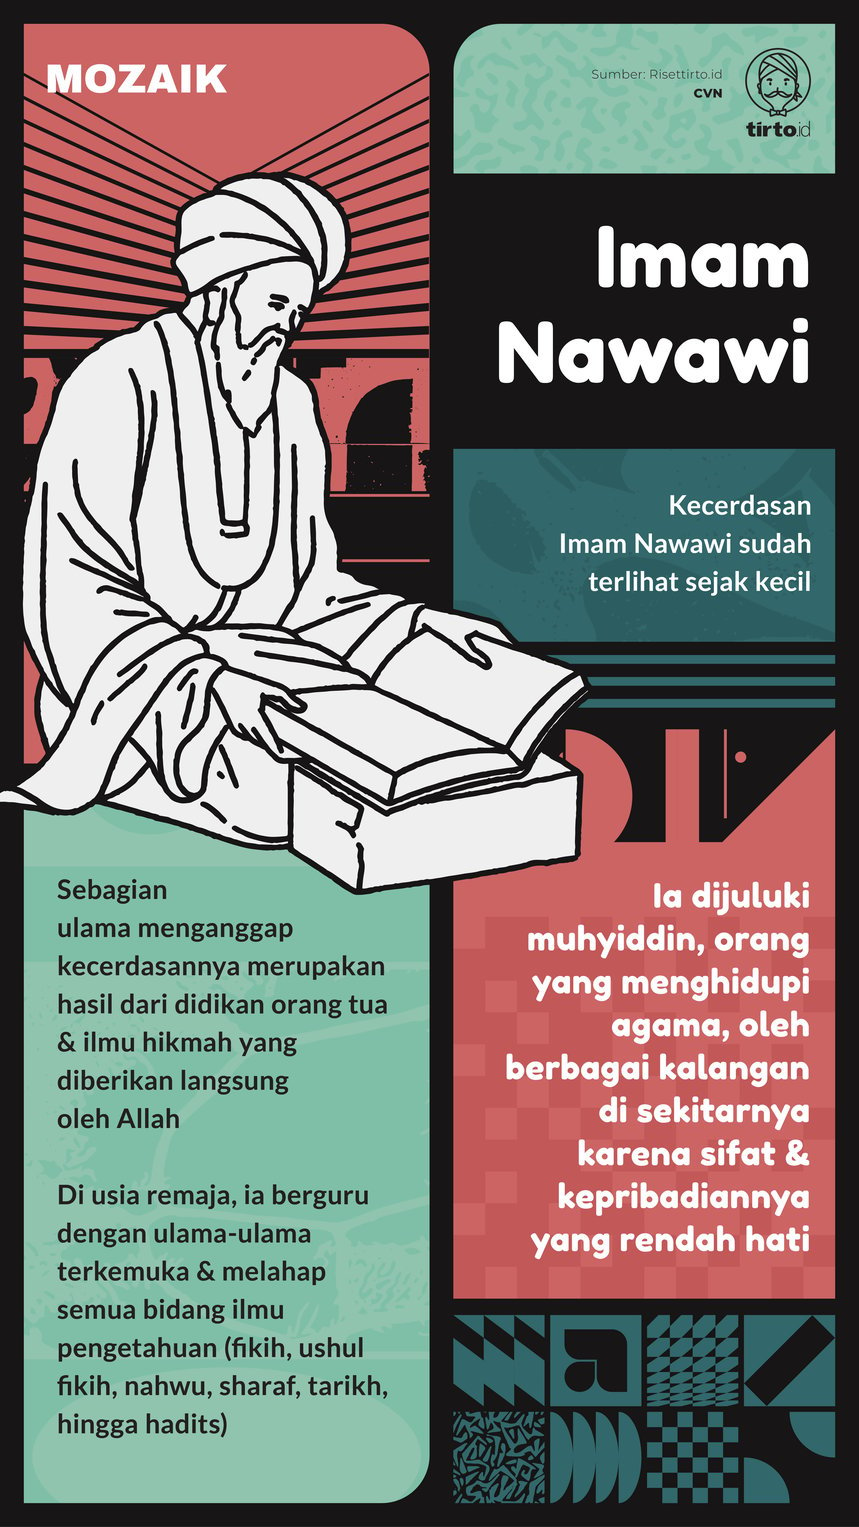 Infografik Mozaik Imam Nawawi